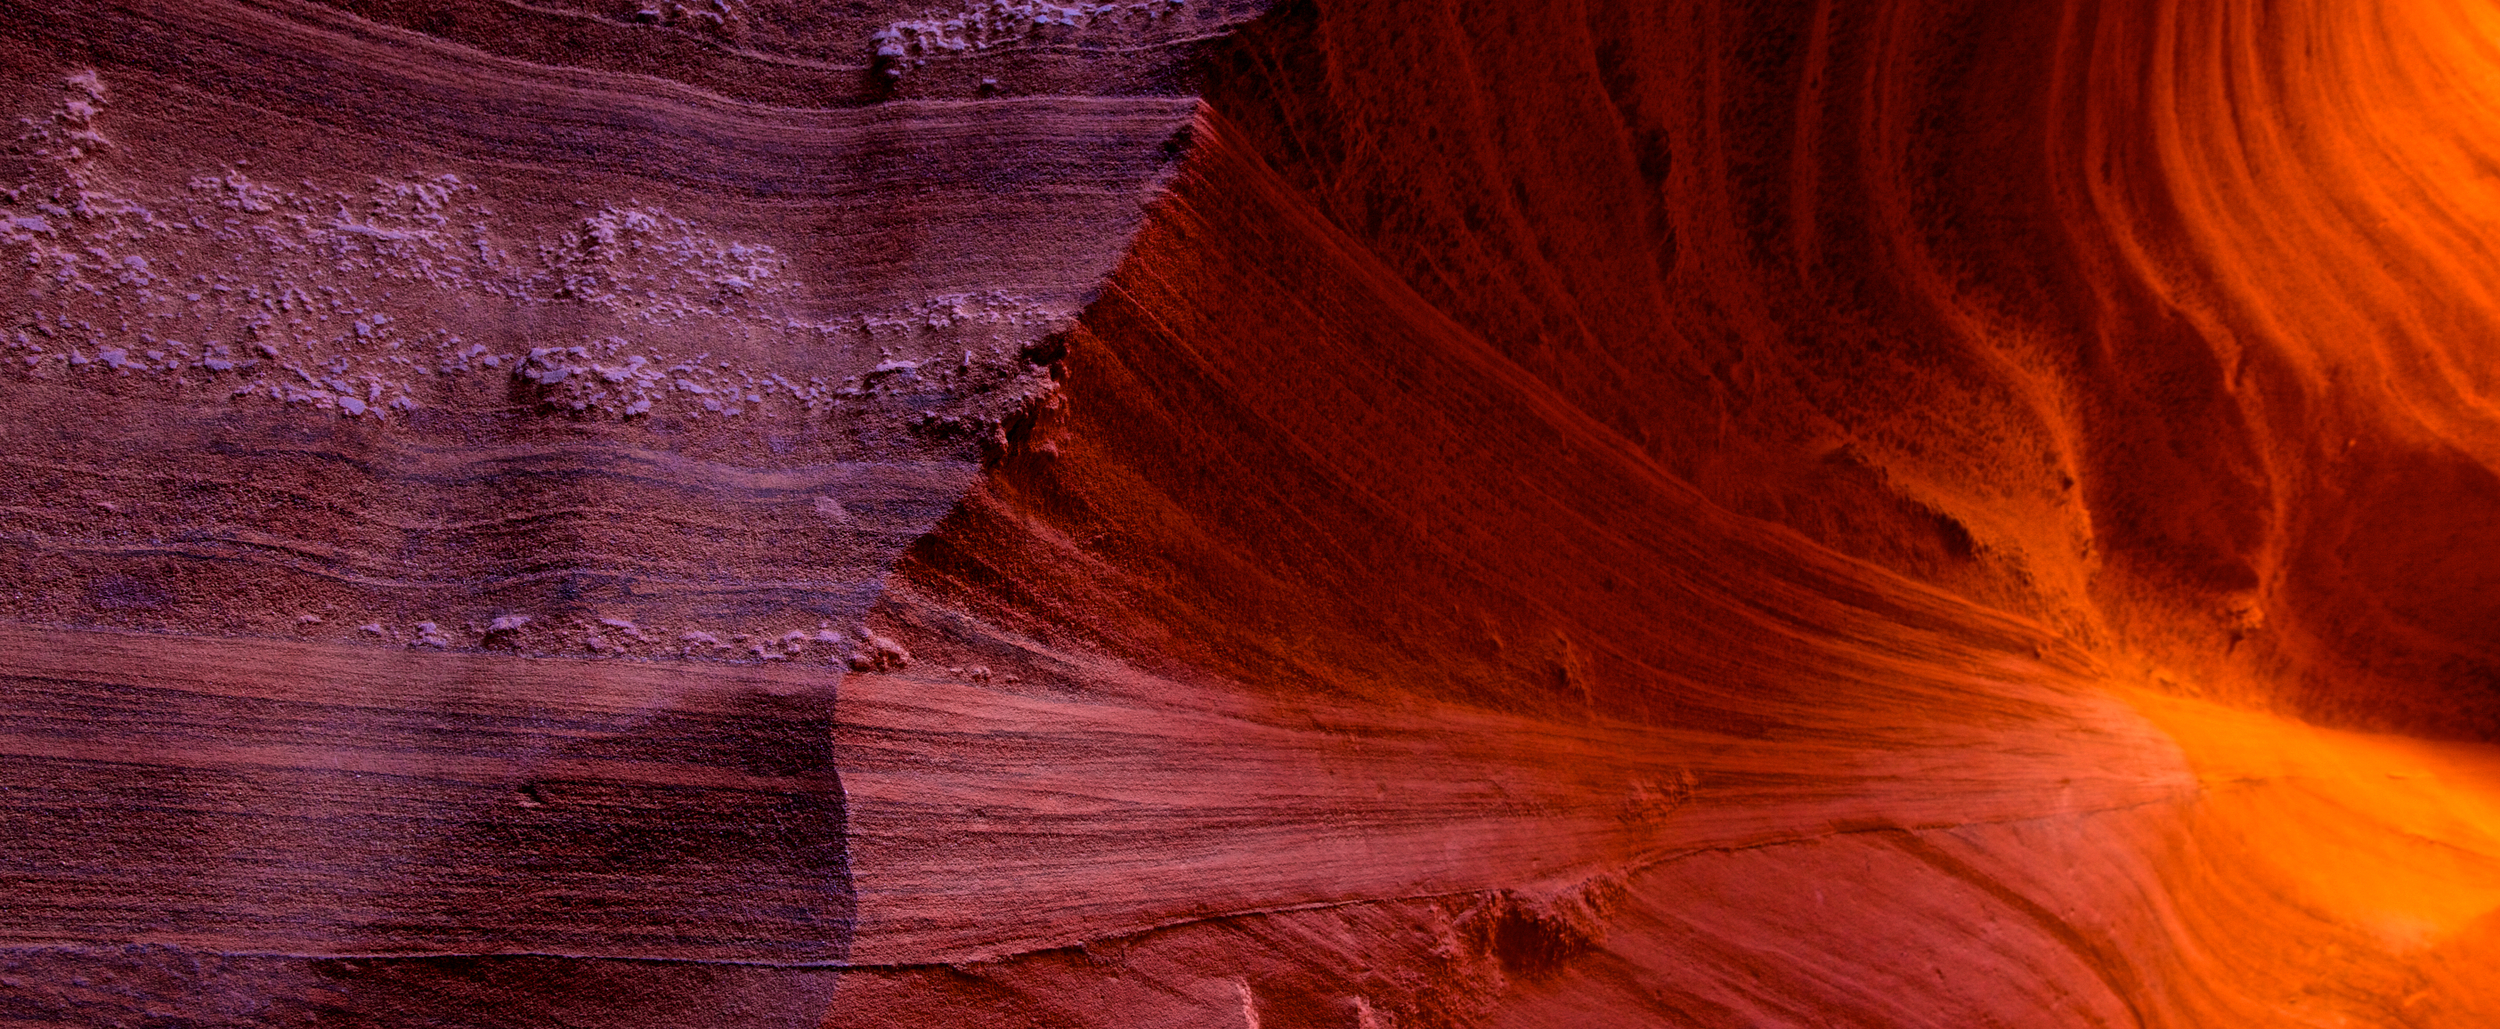 Crimson Lines - Antelope Canyon